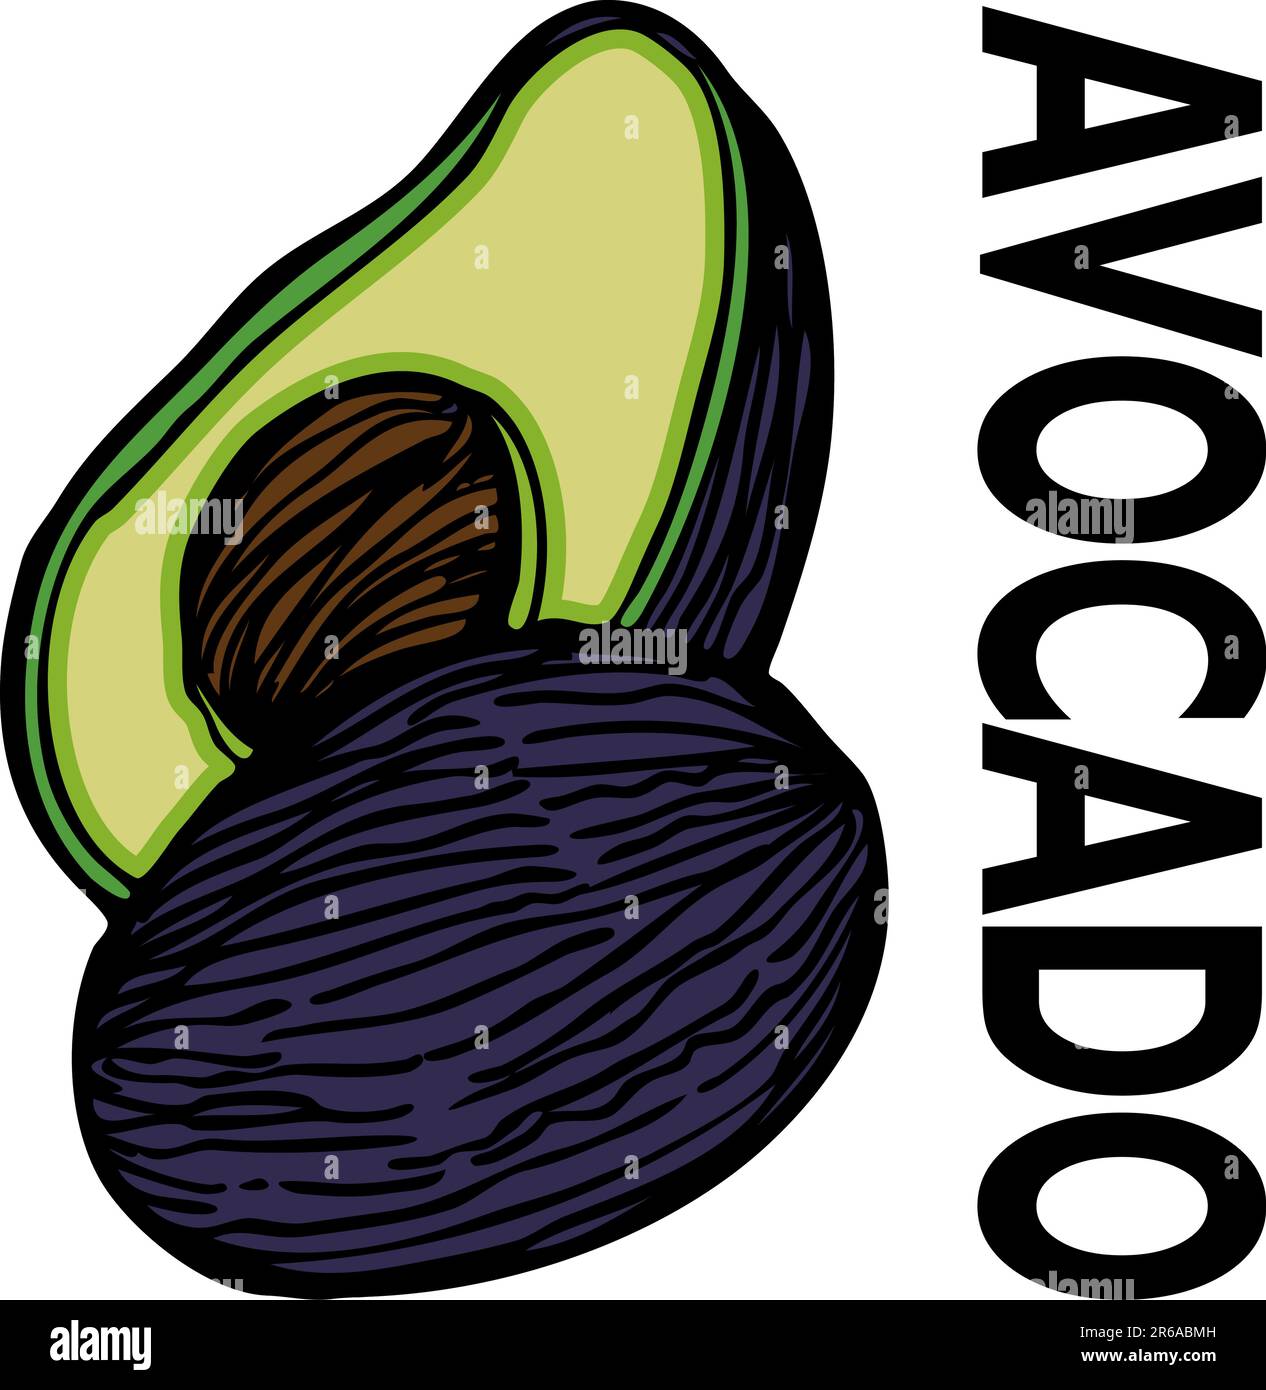 Ein Bild einer Avocado. Stock Vektor